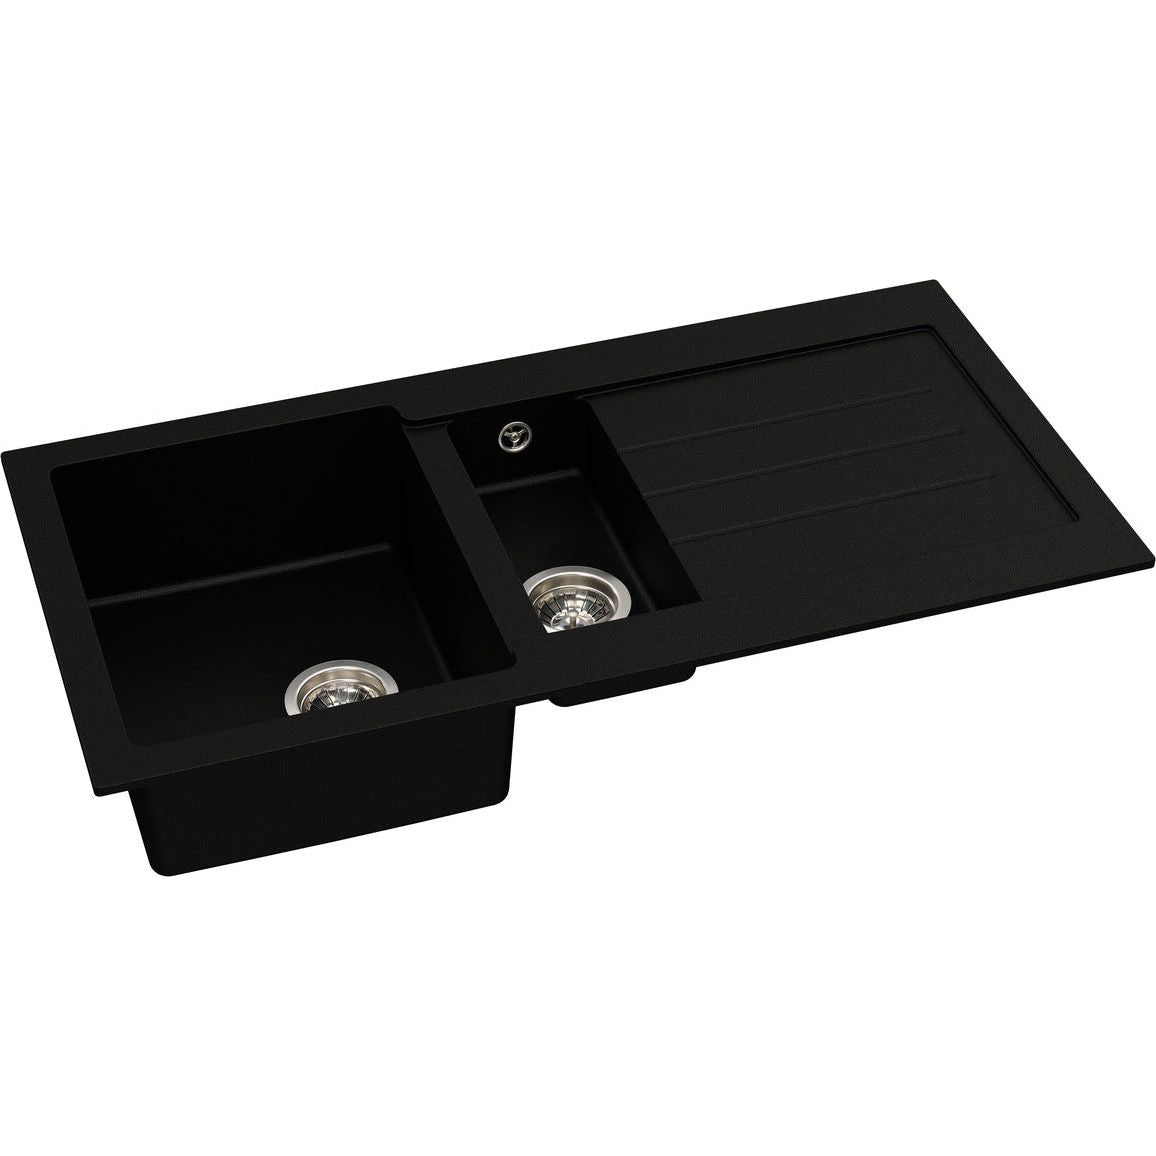 Abode Xcite 1.5B Inset Black Metallic Sink & Astral Tap Pack